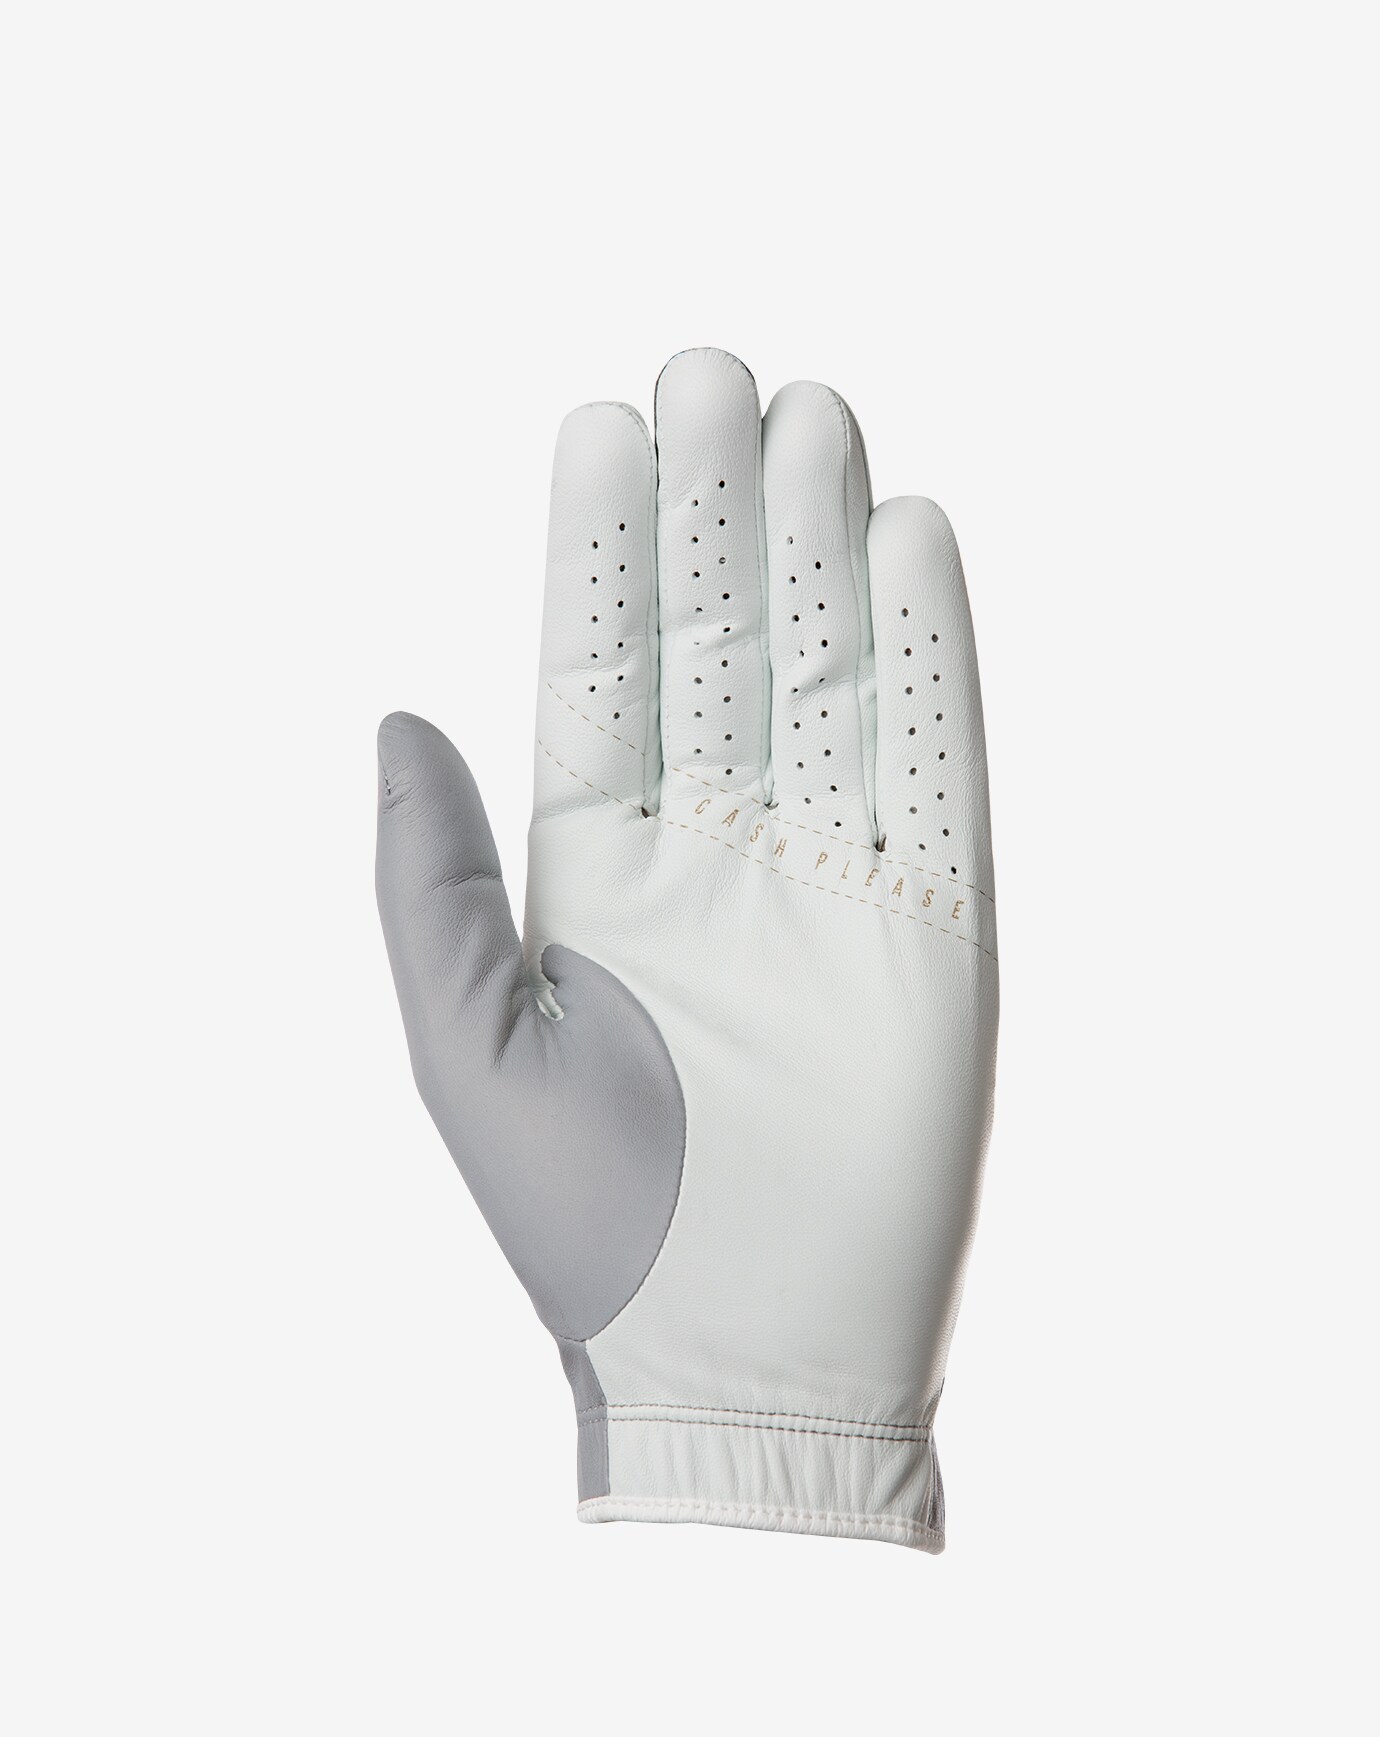 Vip gloves share price